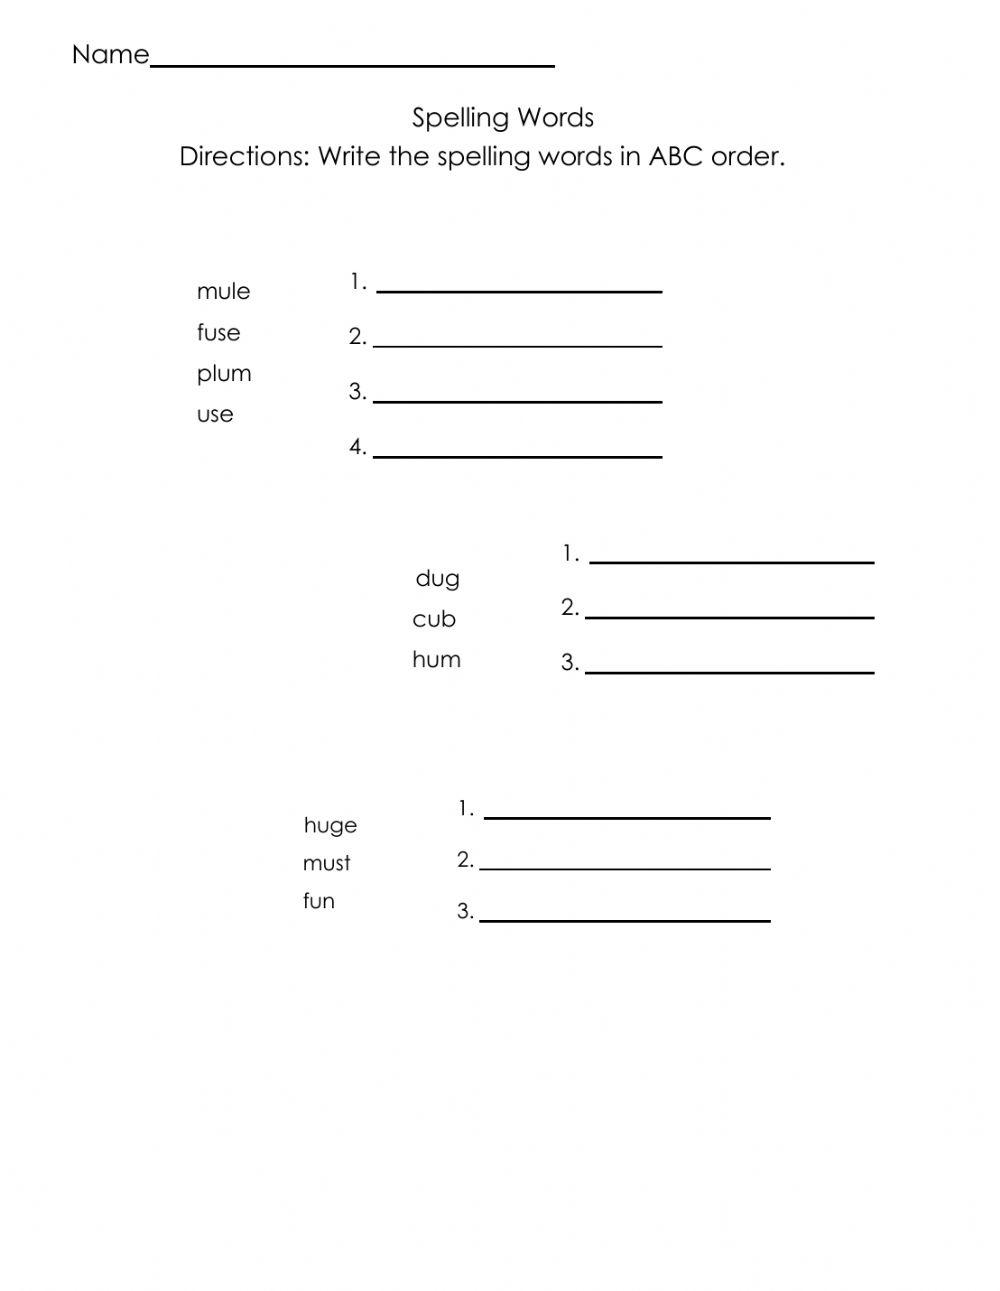 Spelling abc order